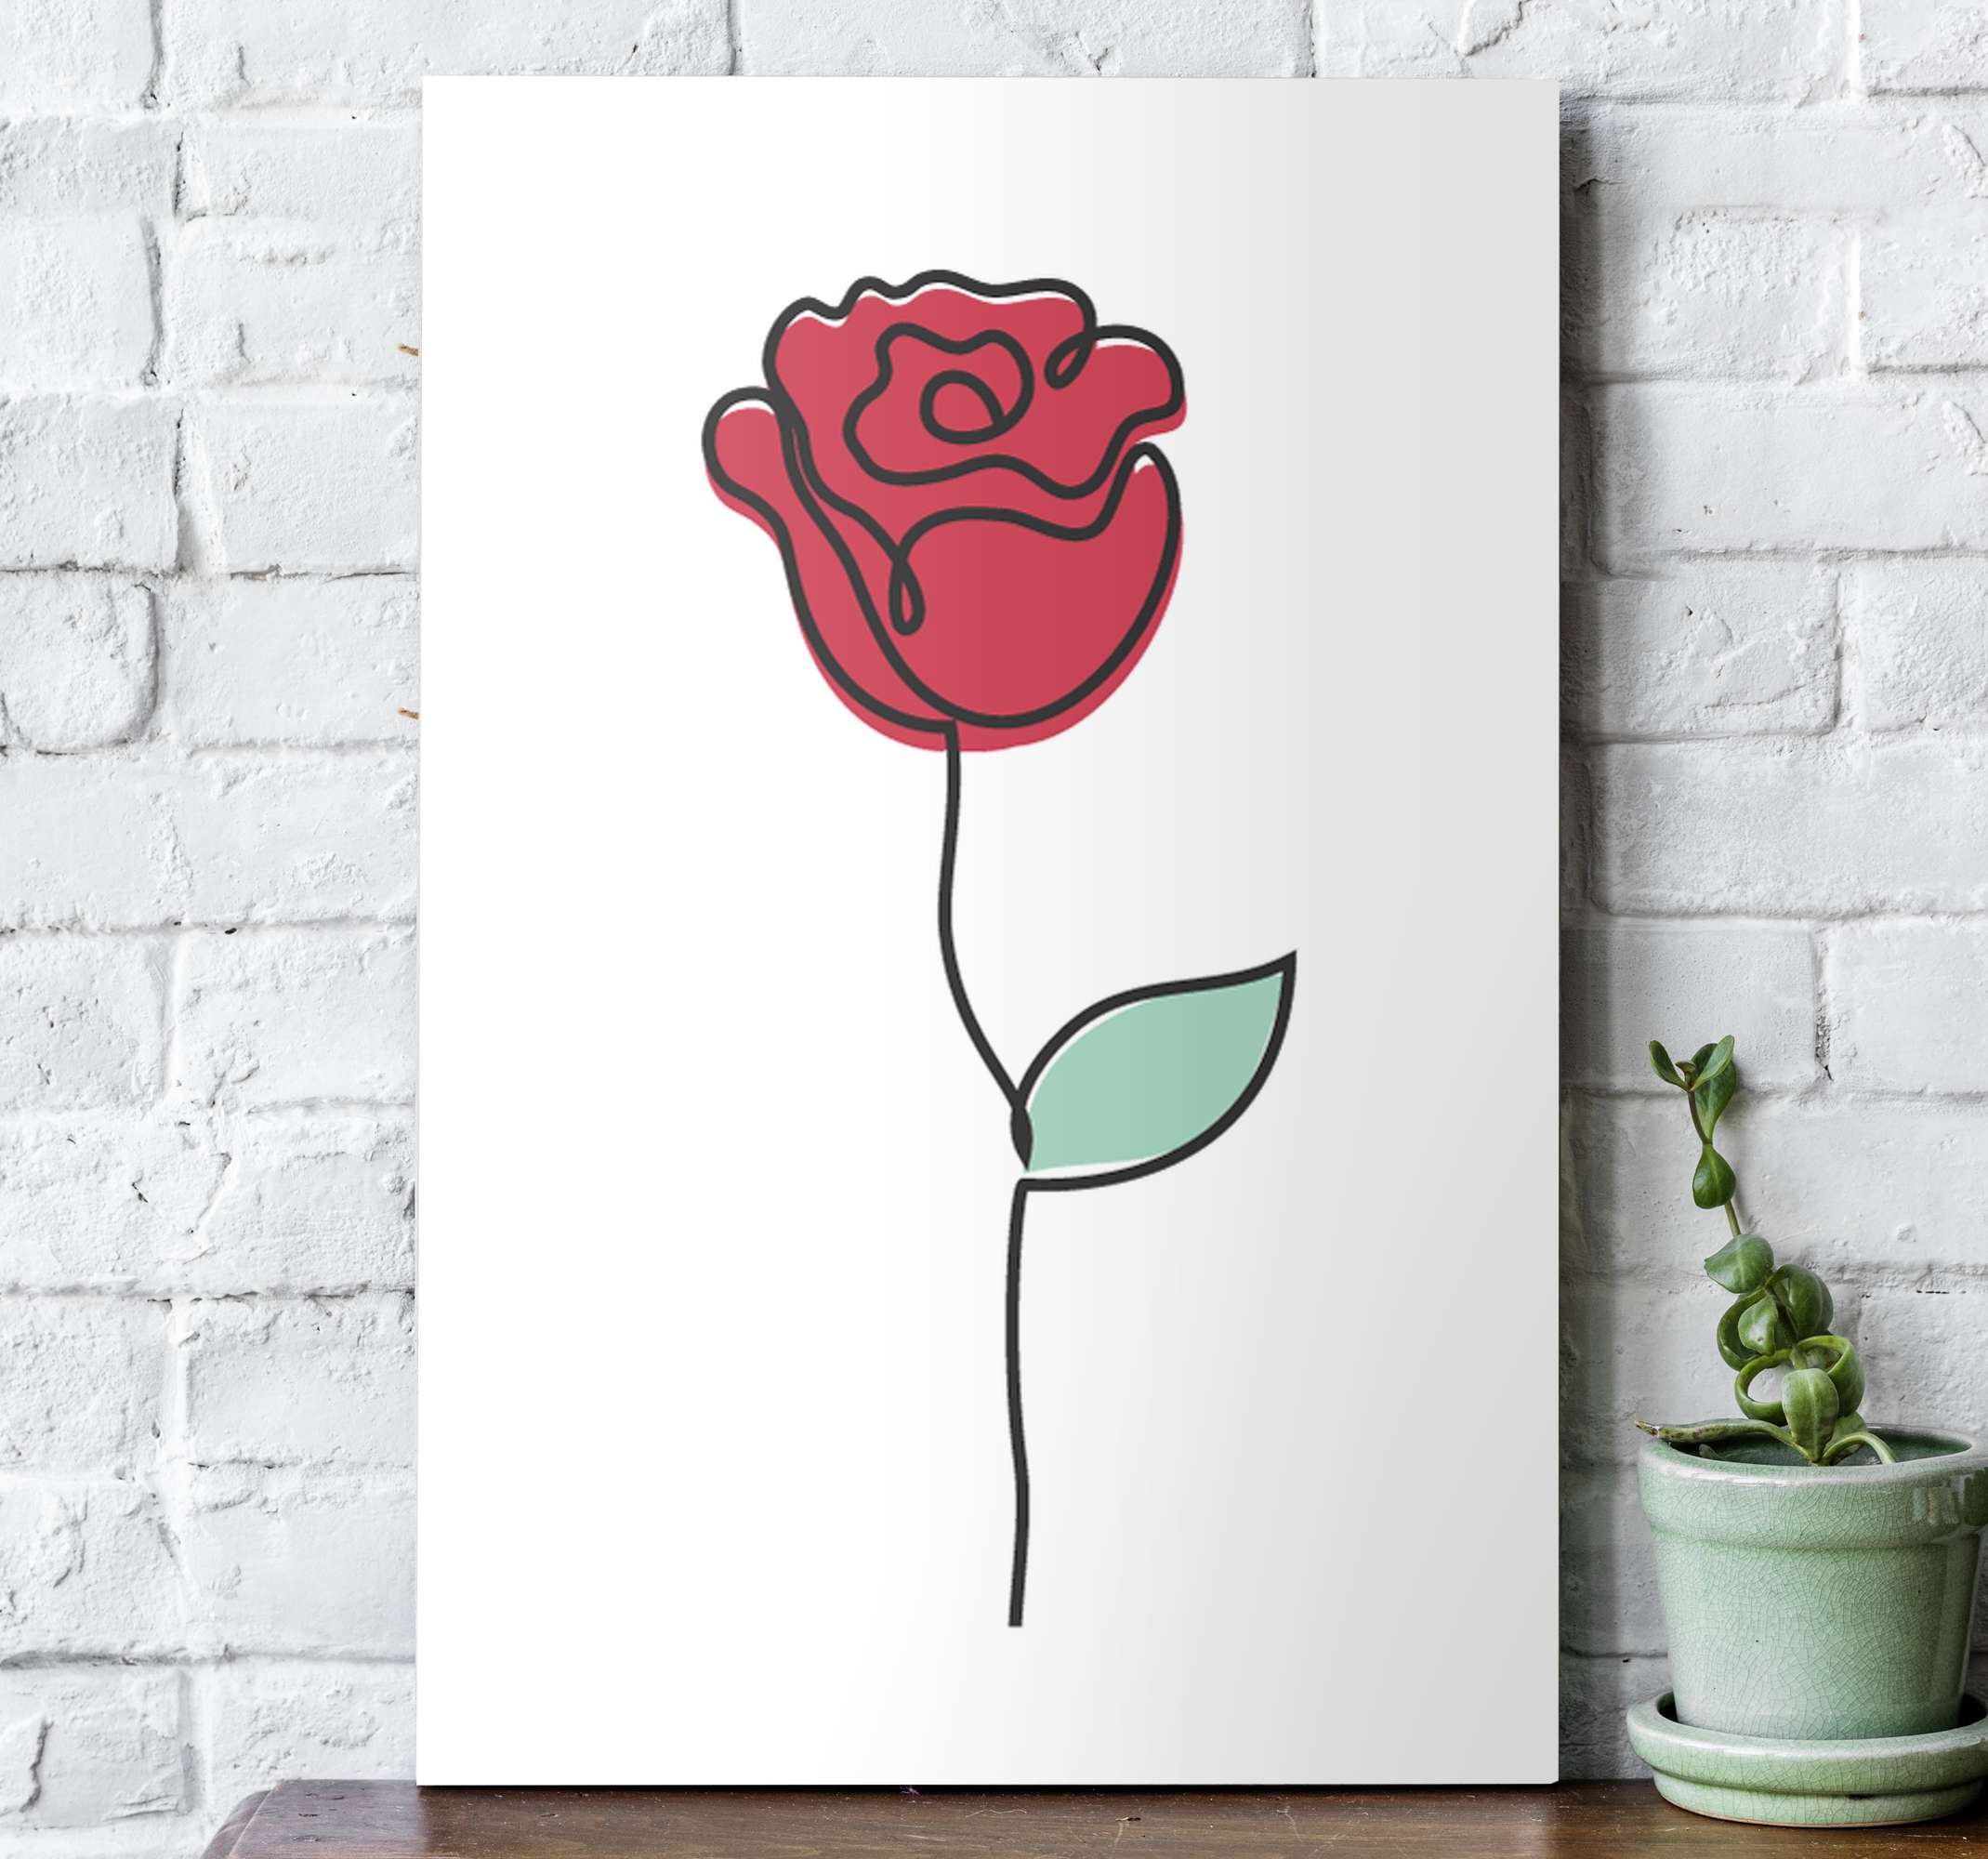 Cute red rose Line art design flower wall decal - TenStickers